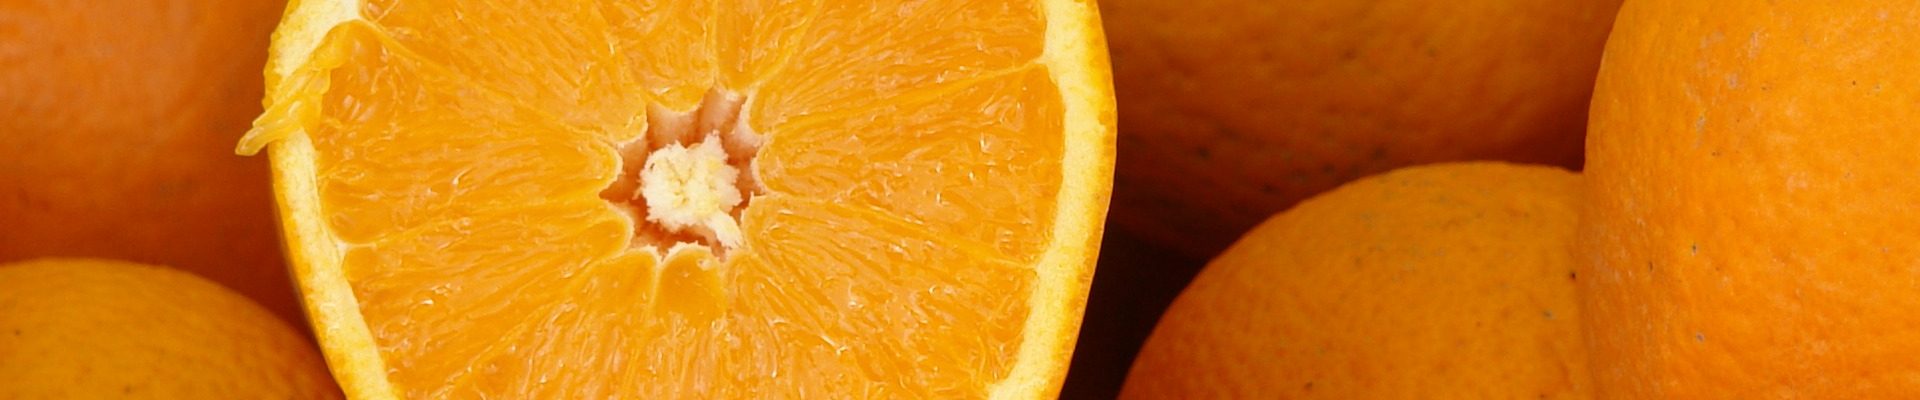 naranja-de-zumo